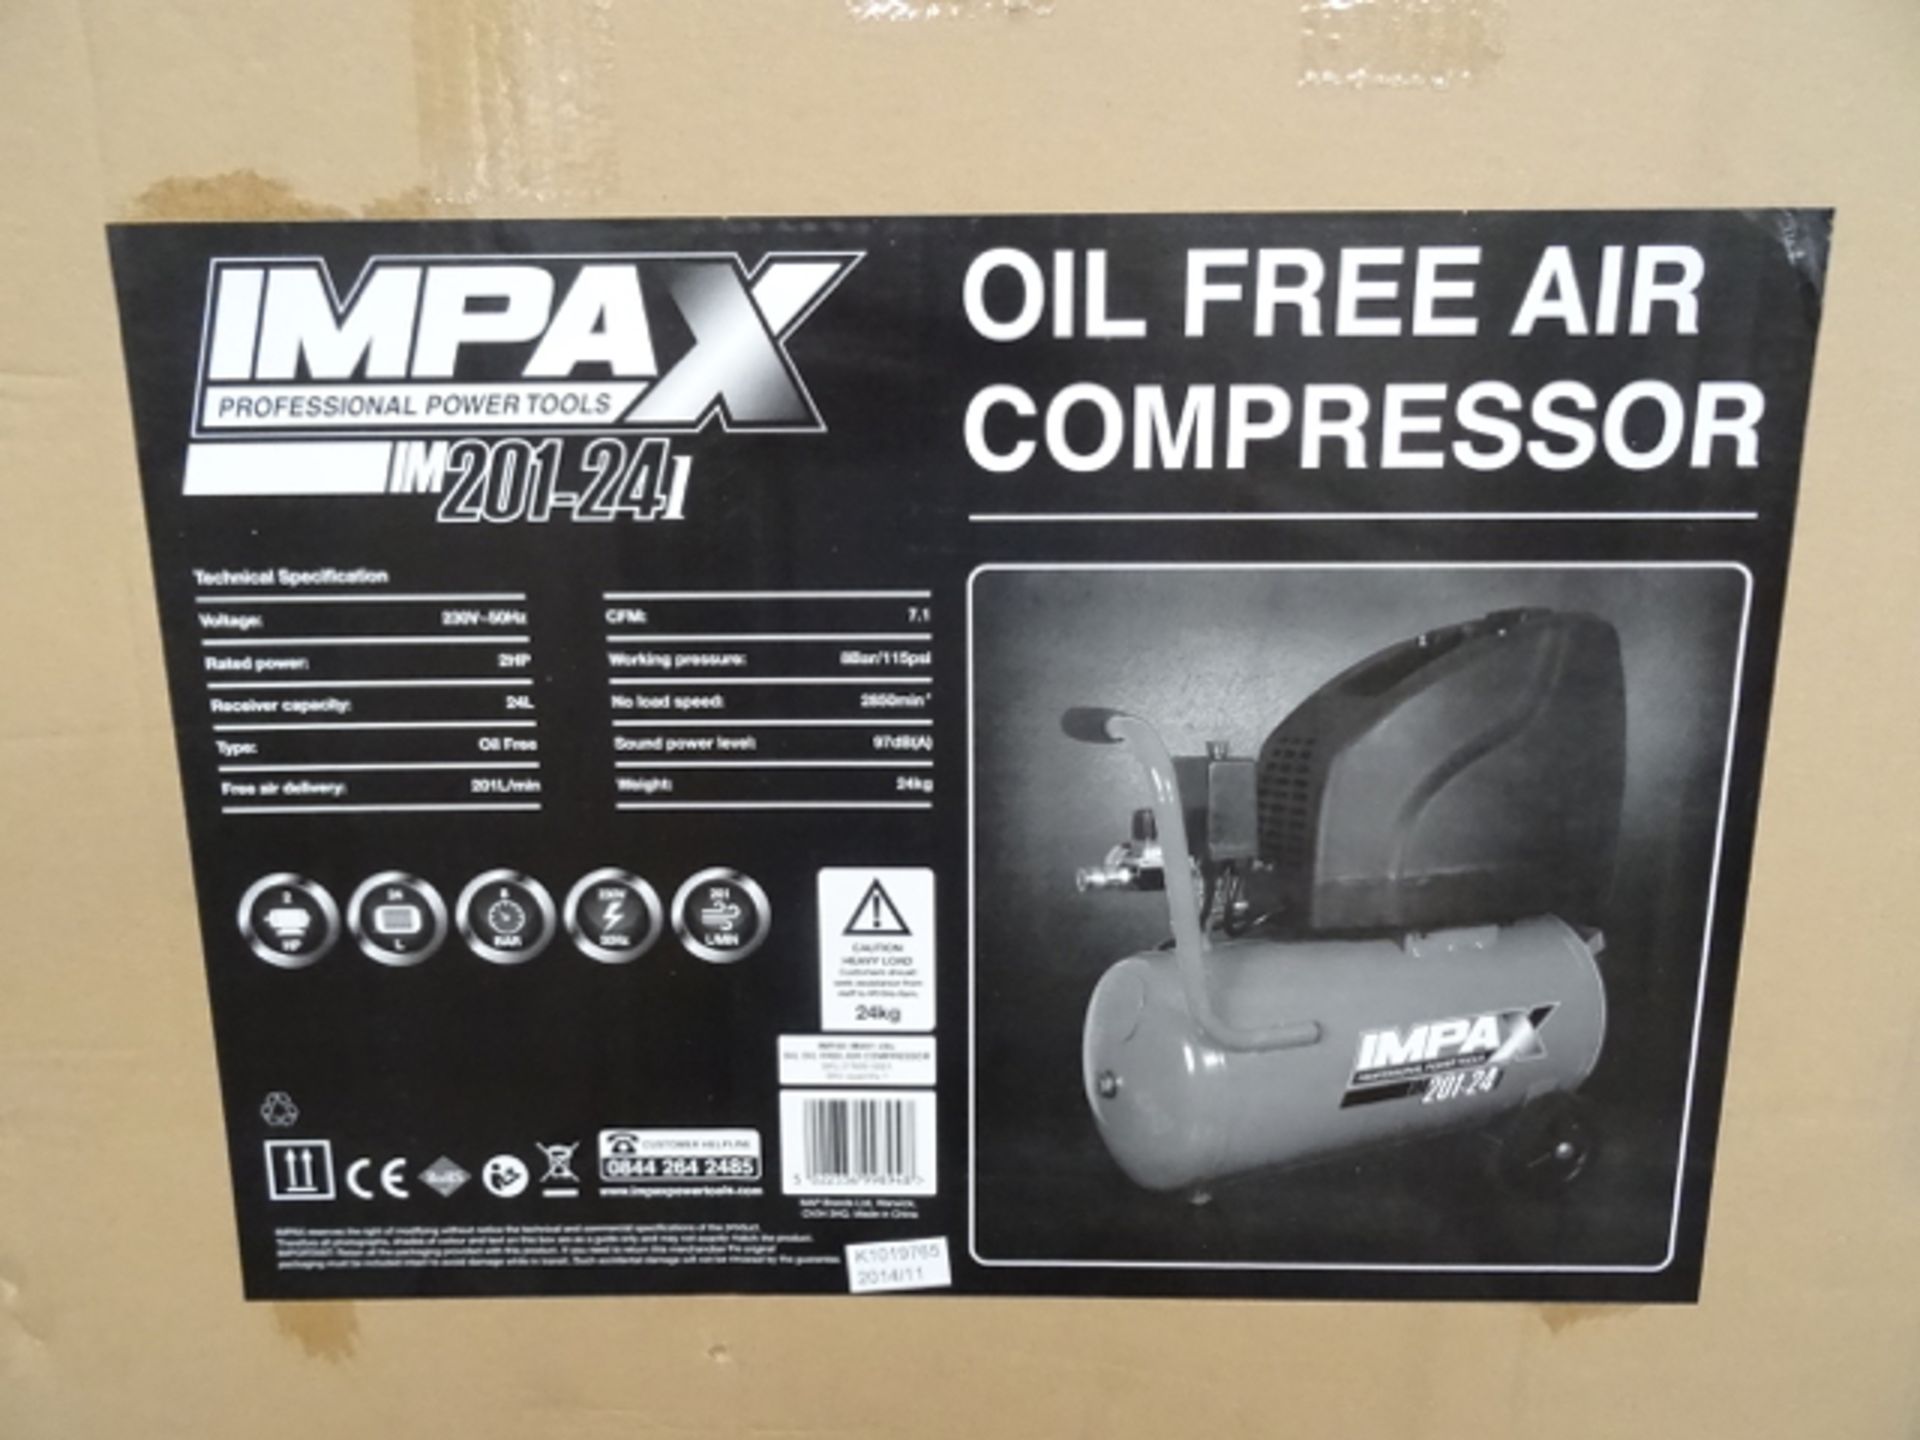 1 x Impax IM201-24 Oil Free Air Compressor. 8 Bar/115Psi Working Pressue. 2HP, 24L, Oil free,